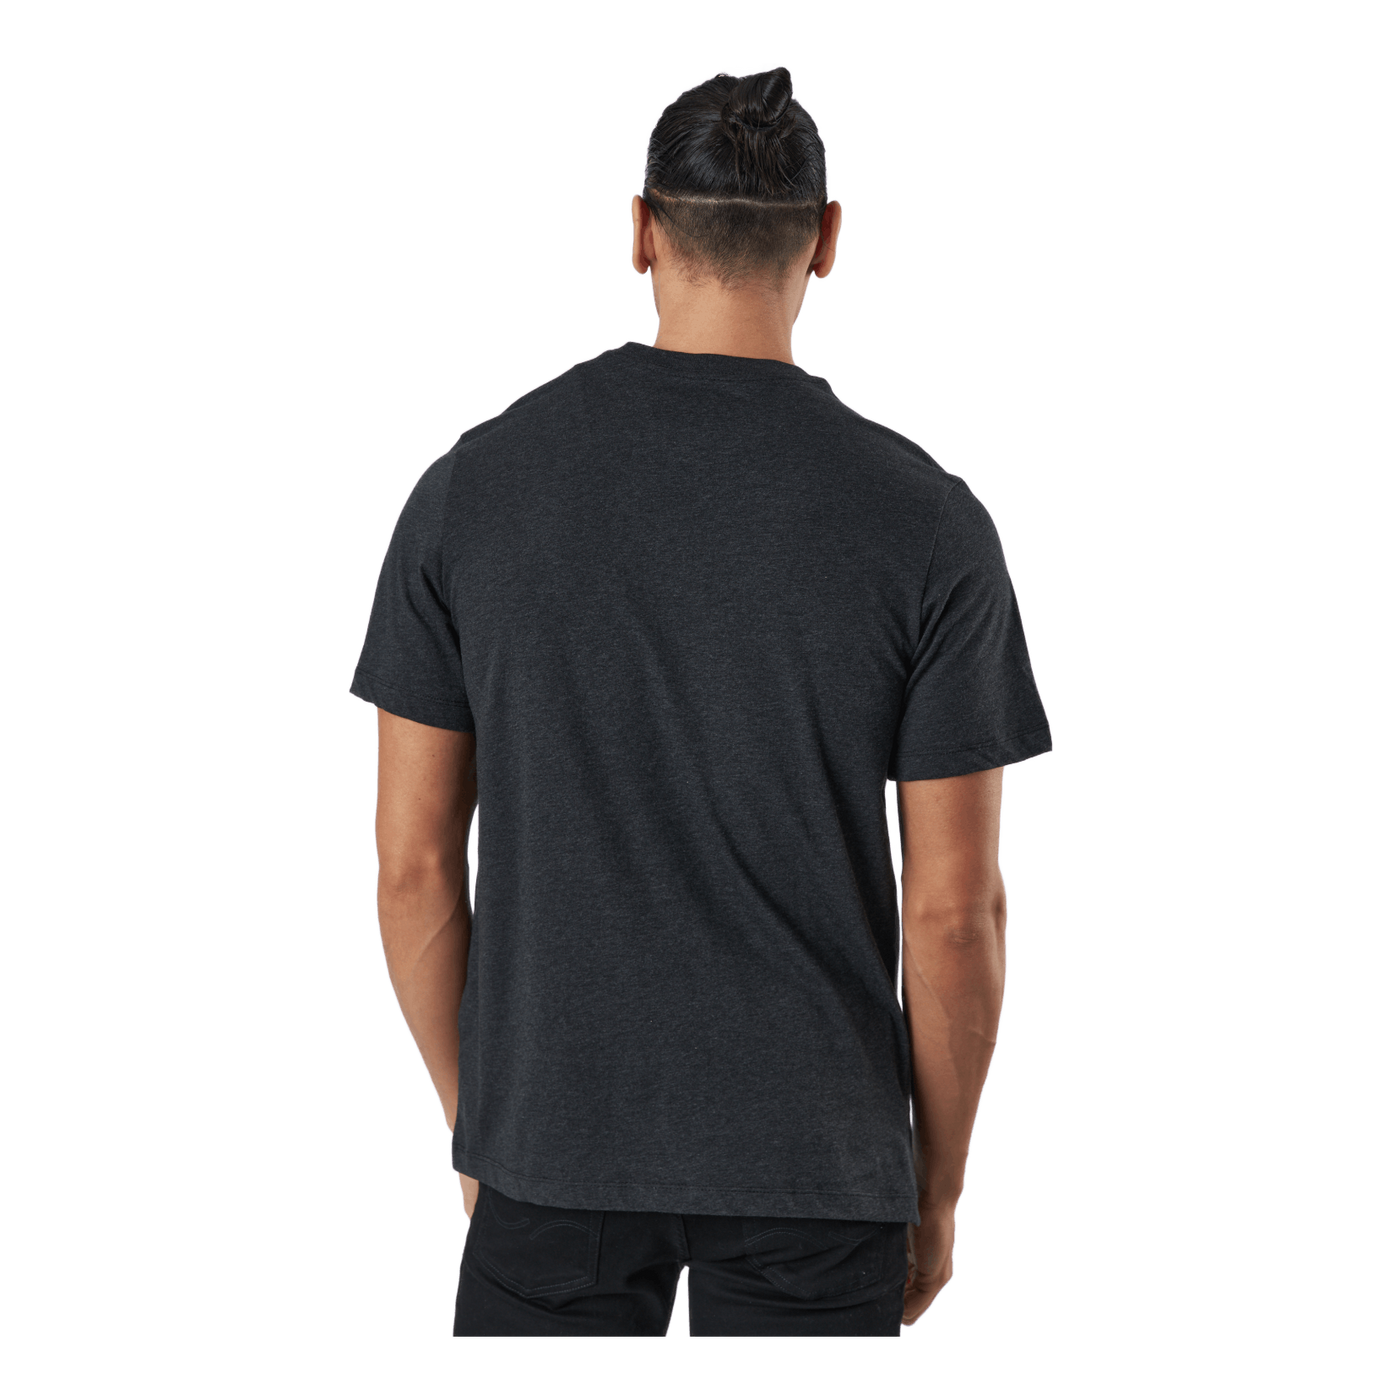 Sportswear Men's T-shirt Black/htr/black